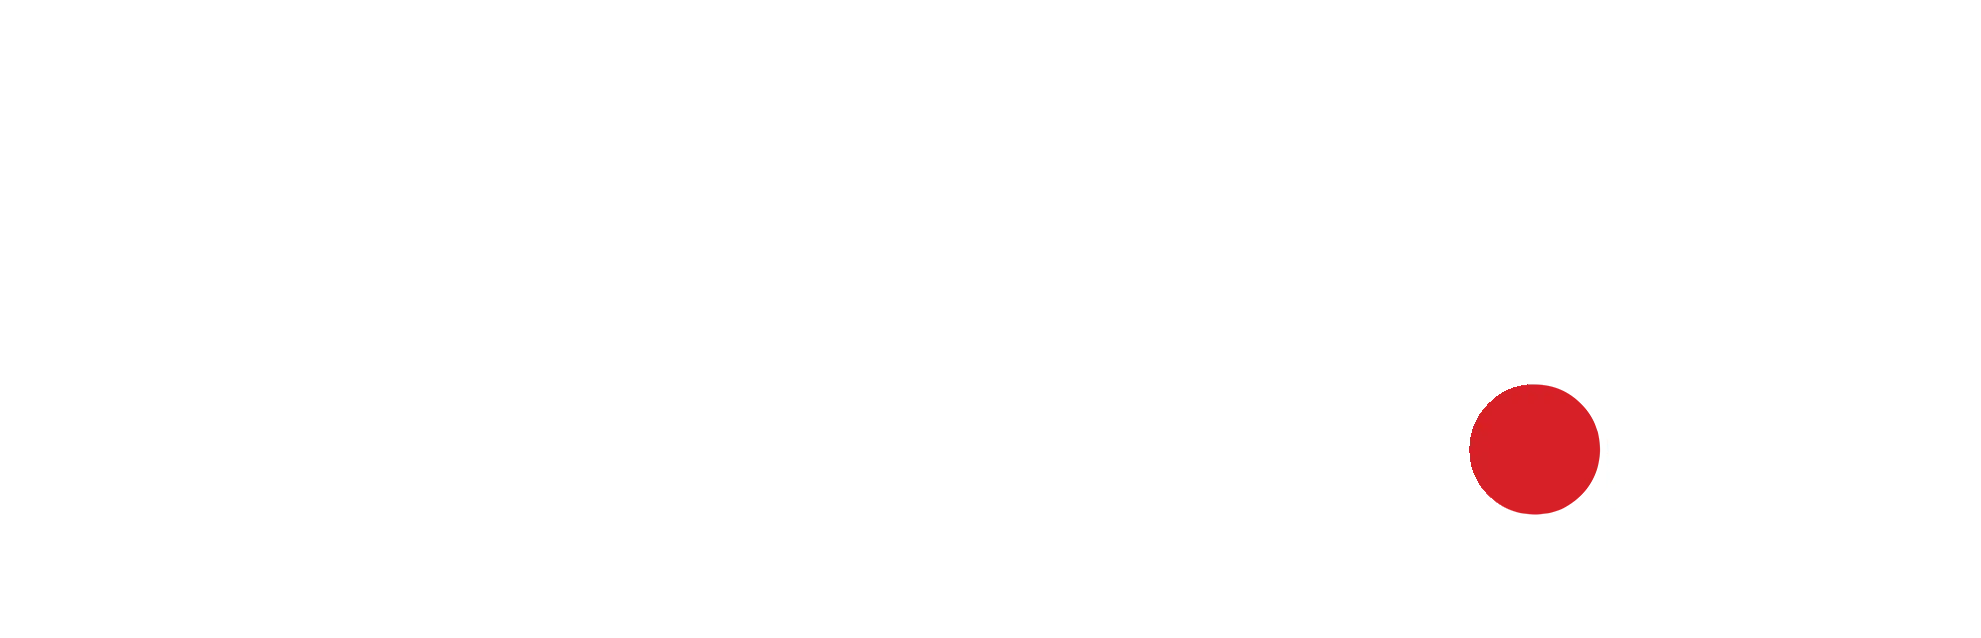 توسعه آهن و فولاد گل گهر